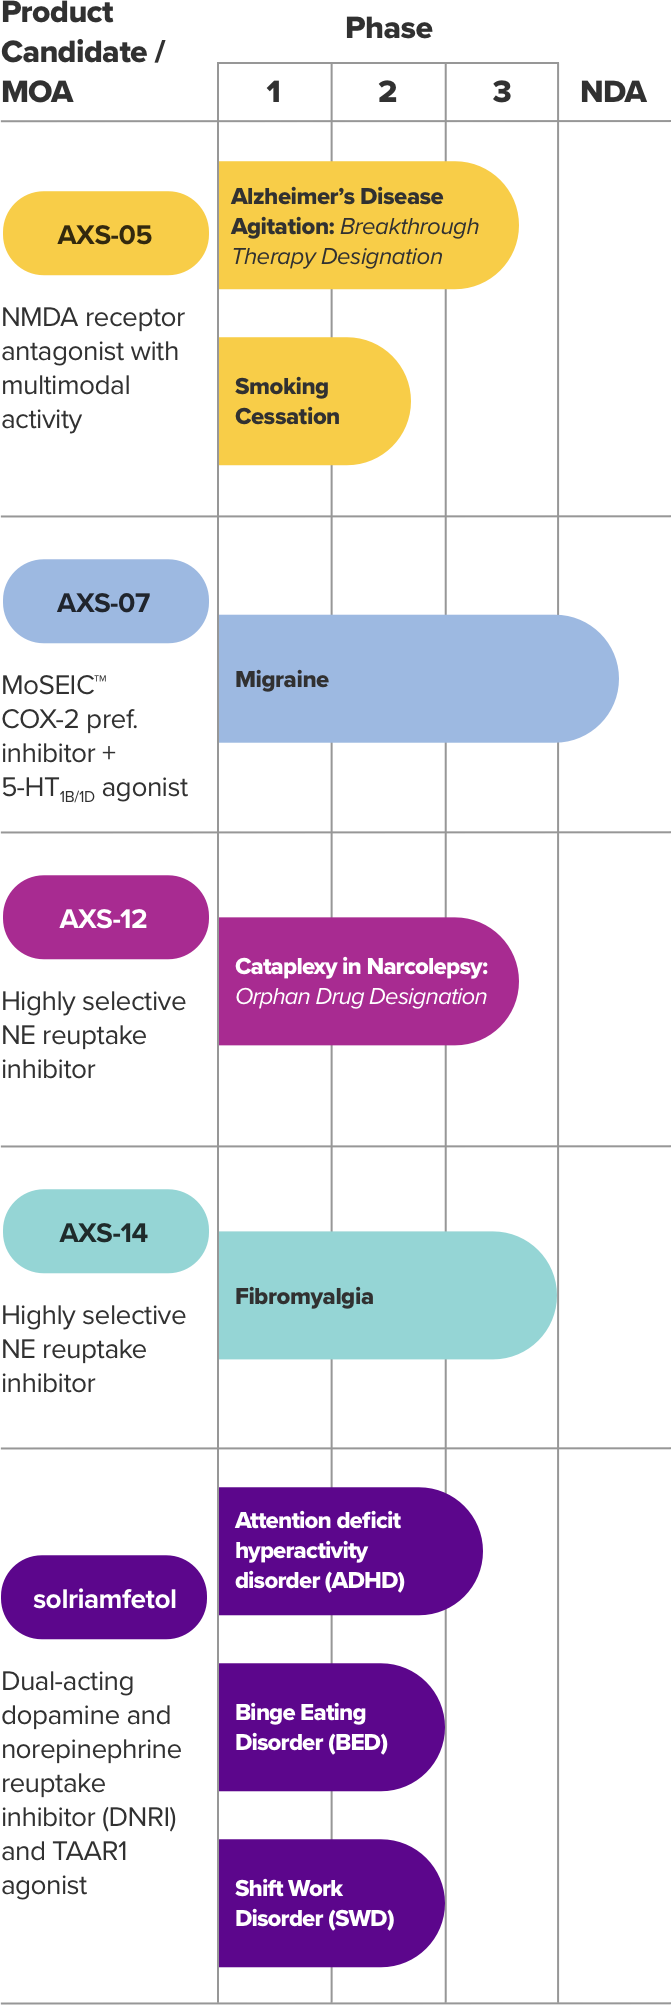 chart showing the progress of five Axsome product candidates: SUNOSI, axs-05, axs-07, axs-12 and axs-14